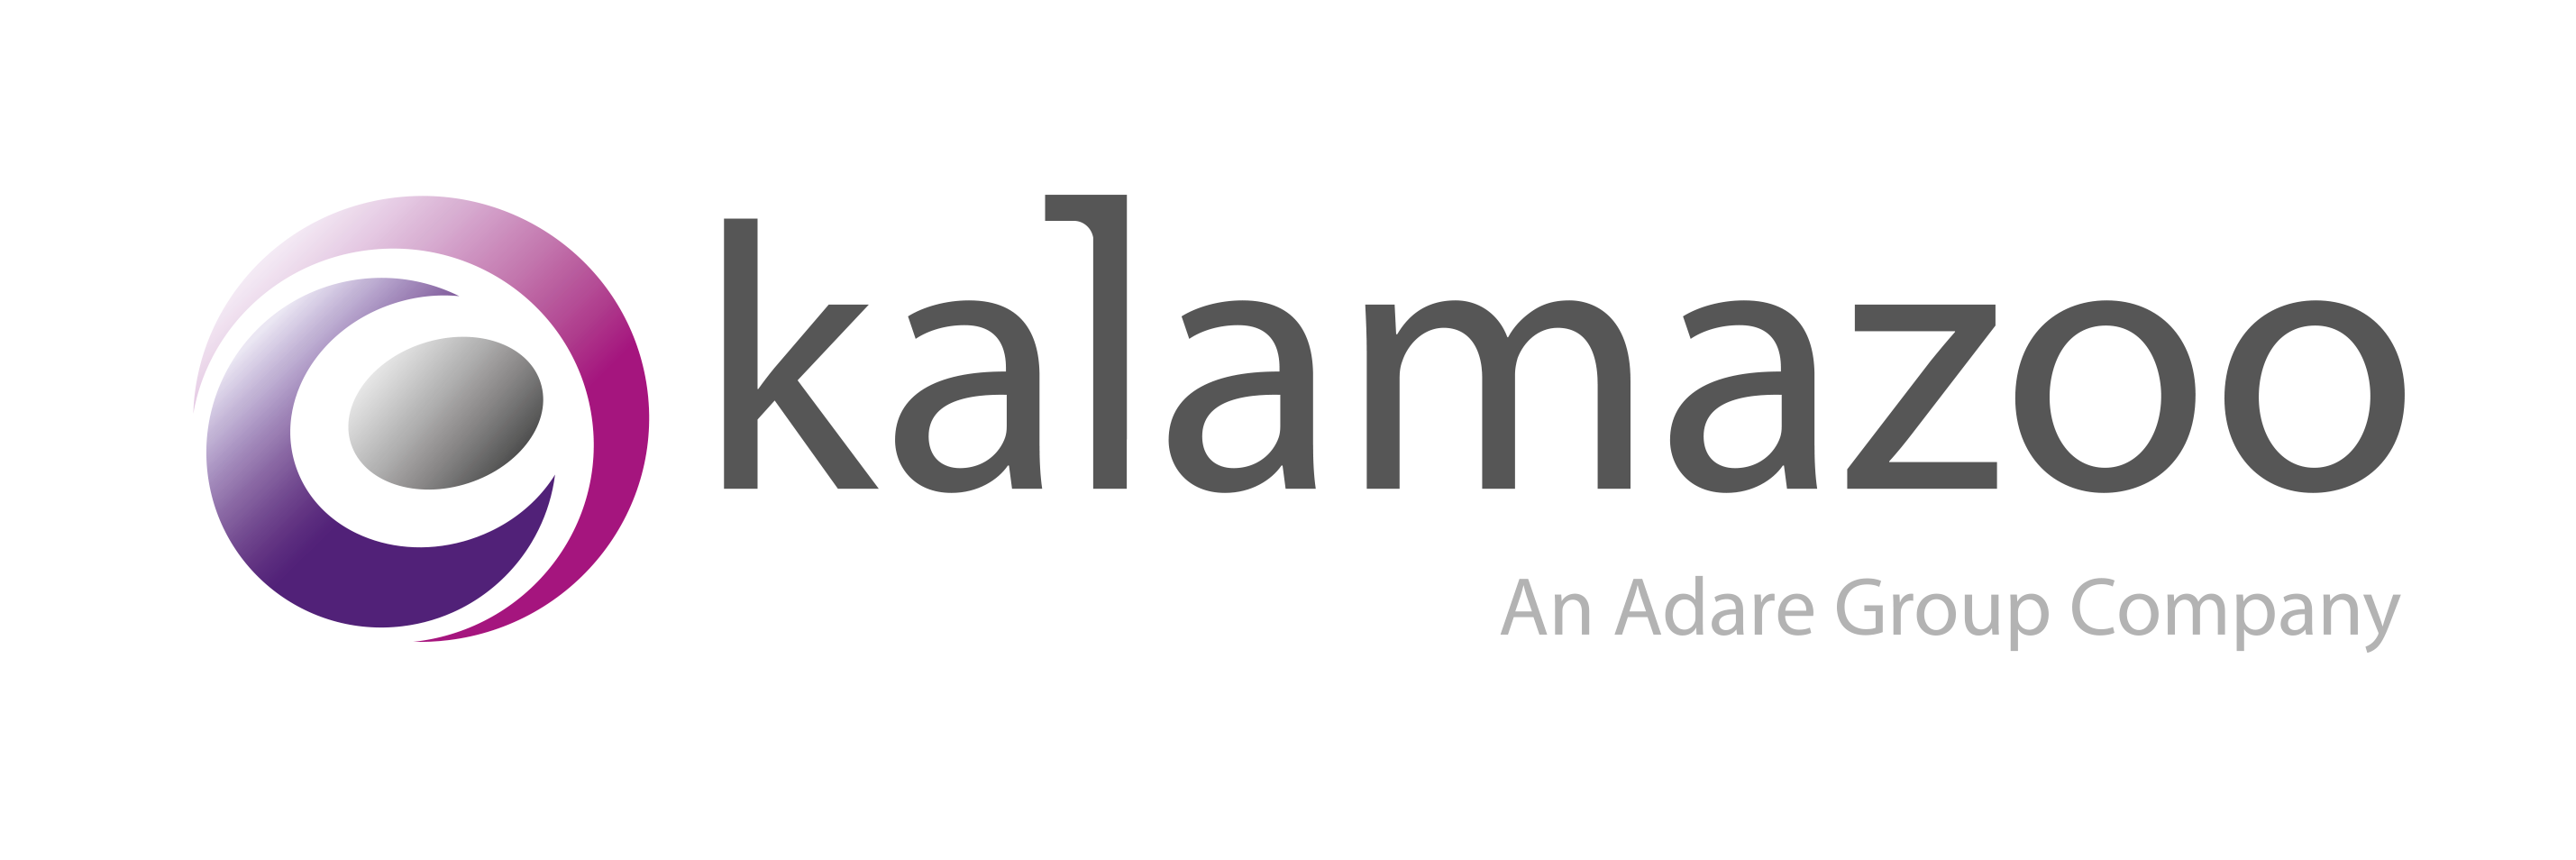 Kalamazoo Secure Solutions Ltd.